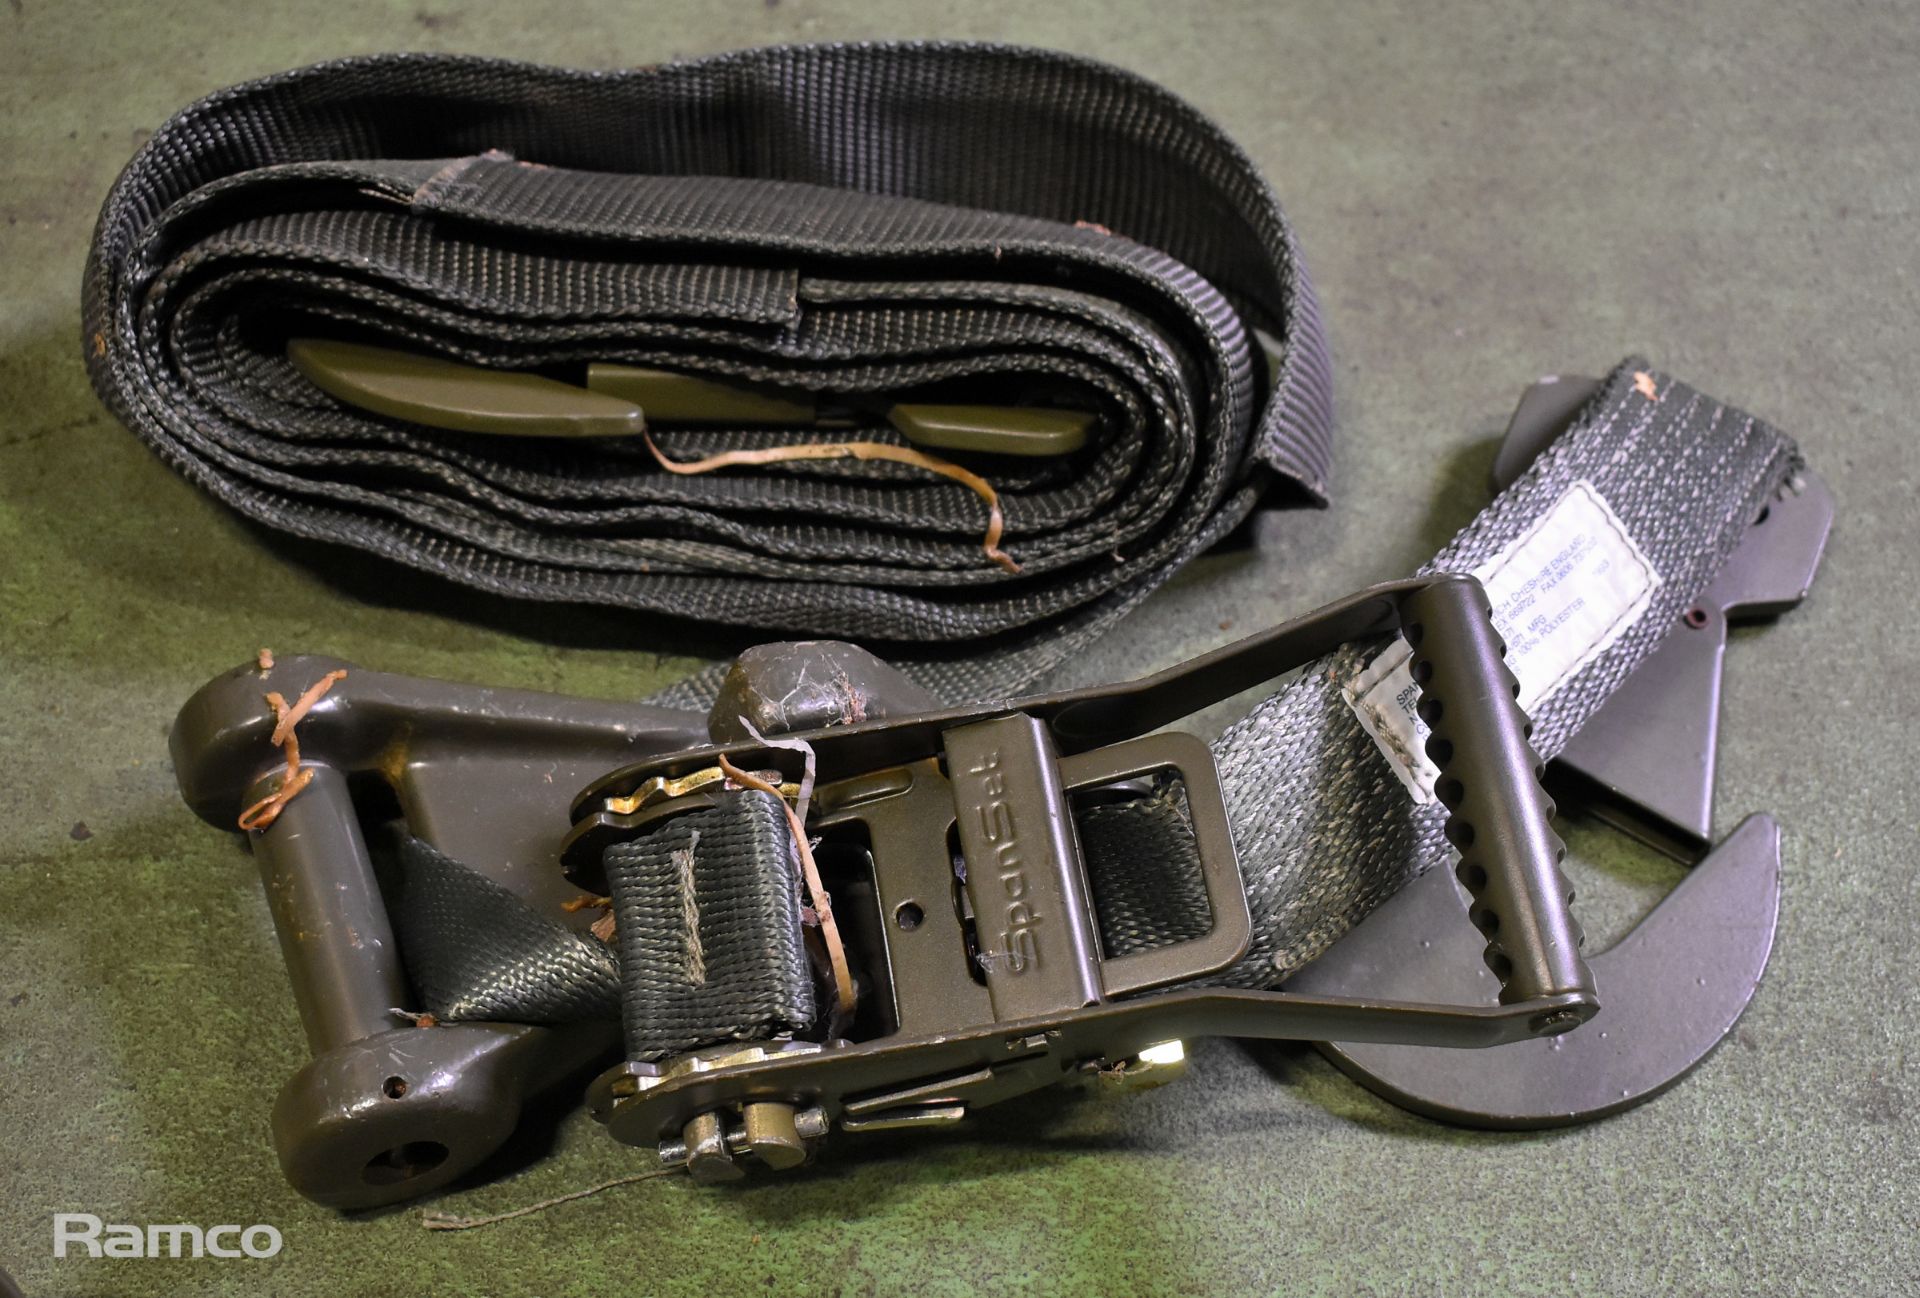 4x Heavy duty spanset ratchet straps - Image 4 of 5